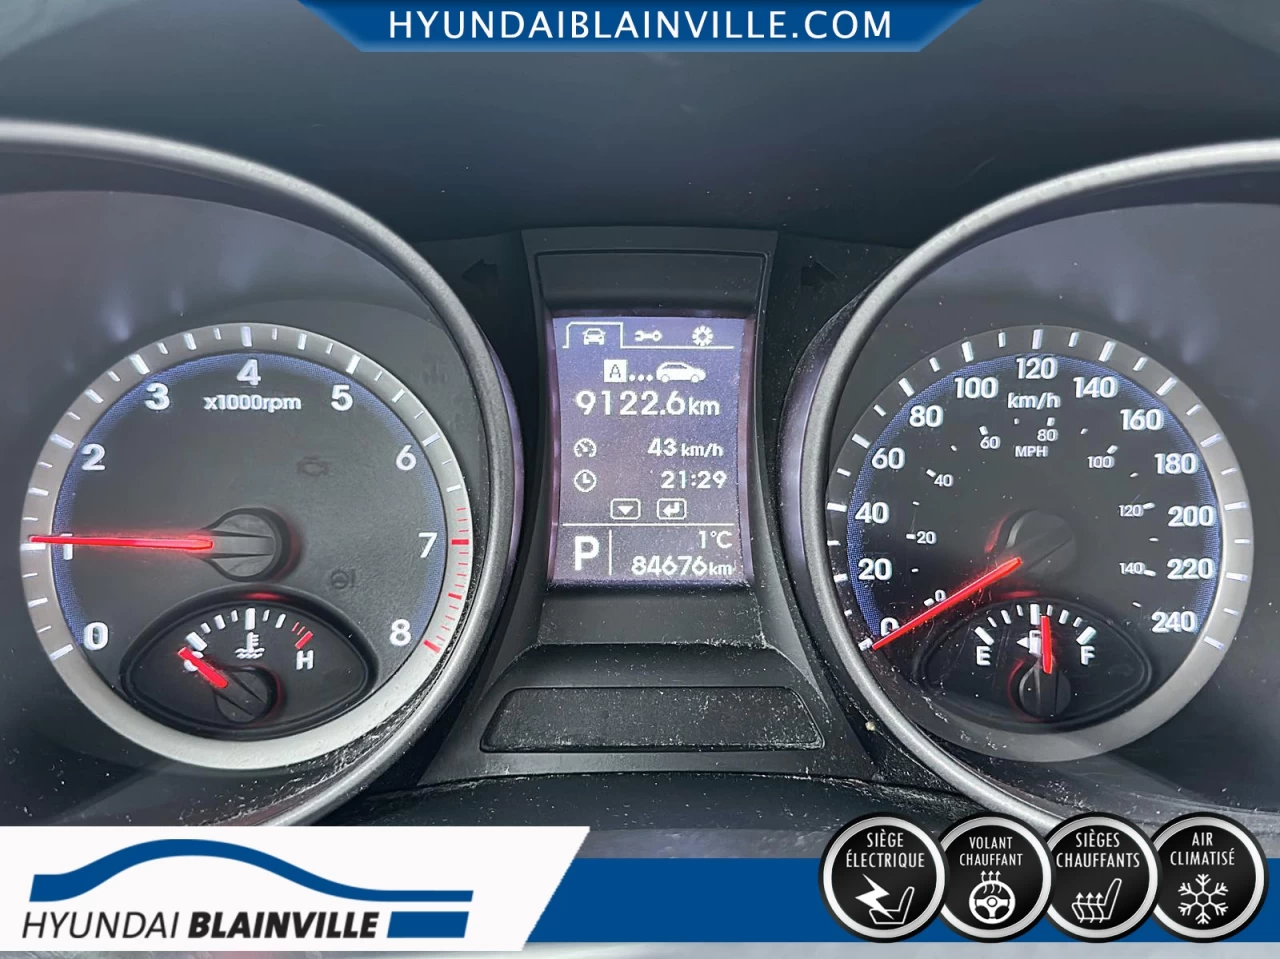 2016 Hyundai Santa Fe Sport FWD, PREMIUM, 2.4L, BANCS CHAUFFANTS+ Main Image